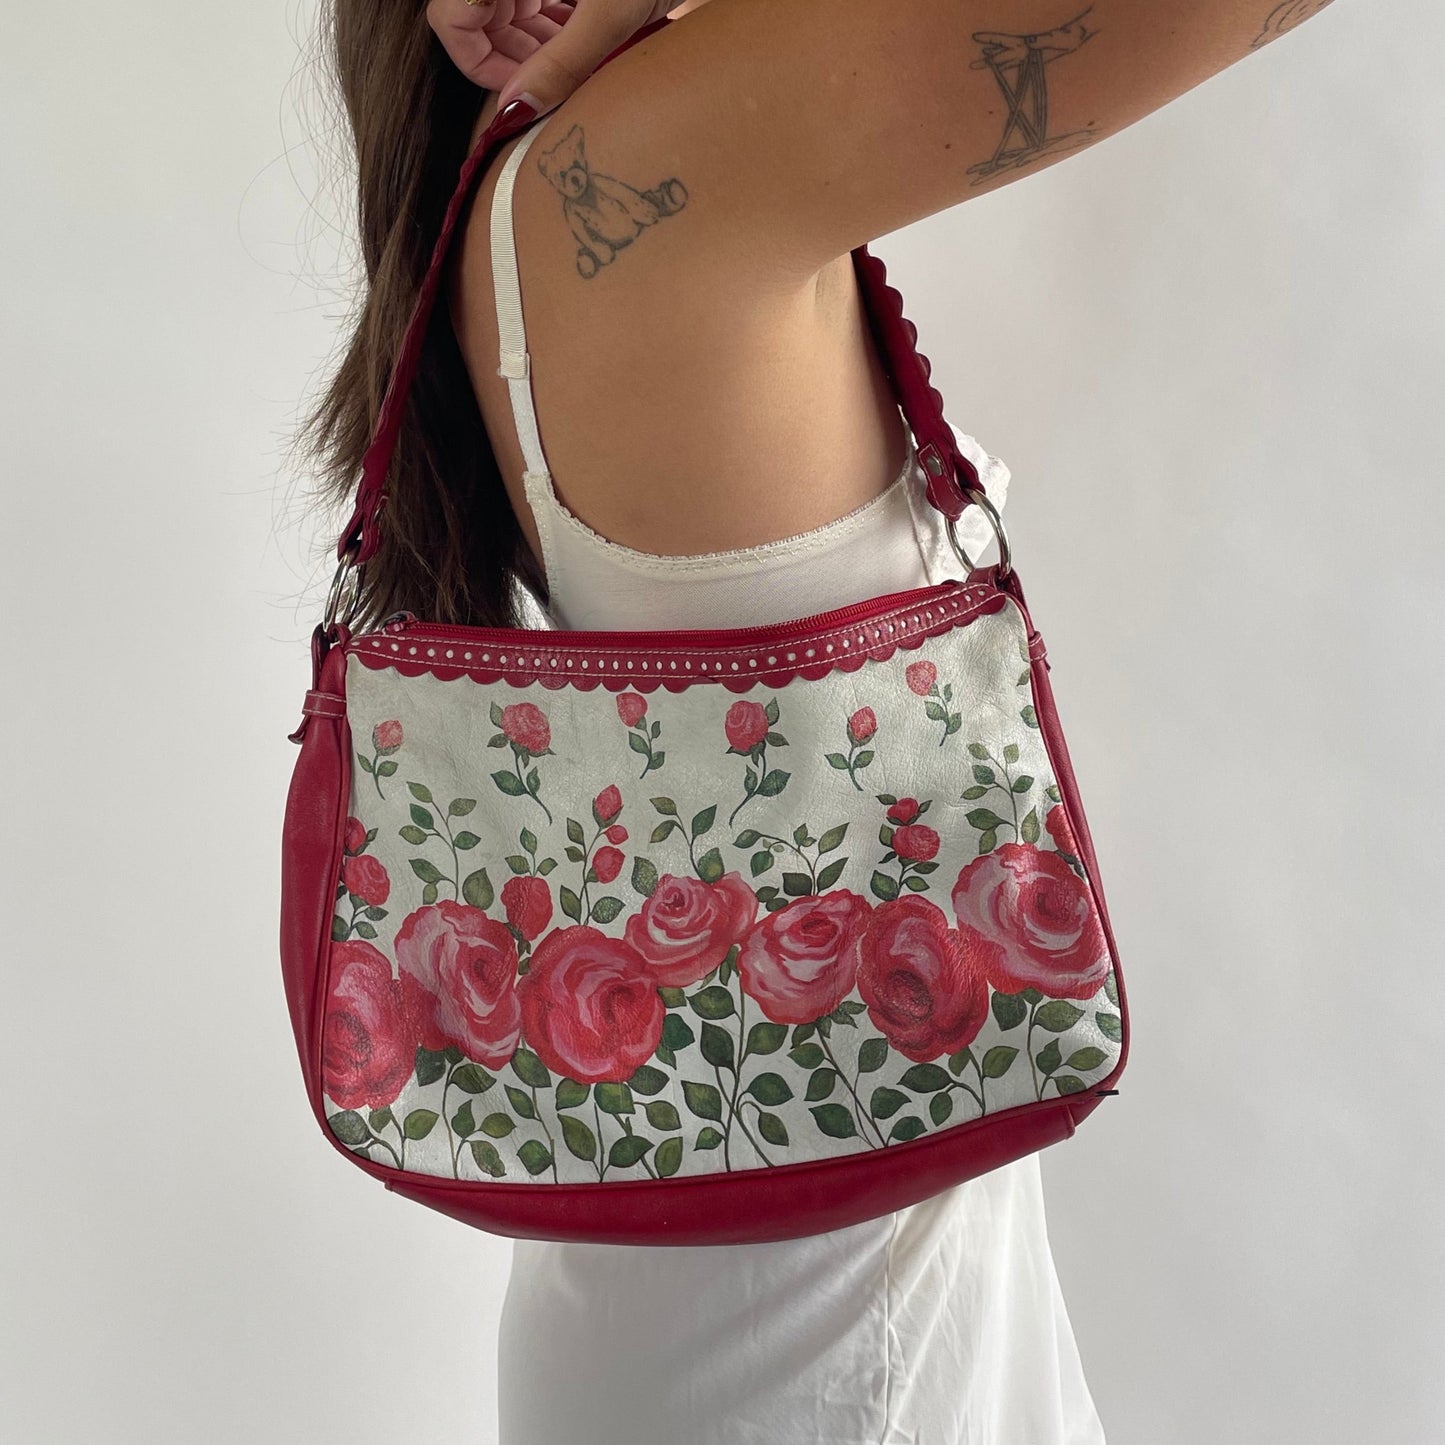 isabella fiore rose purse